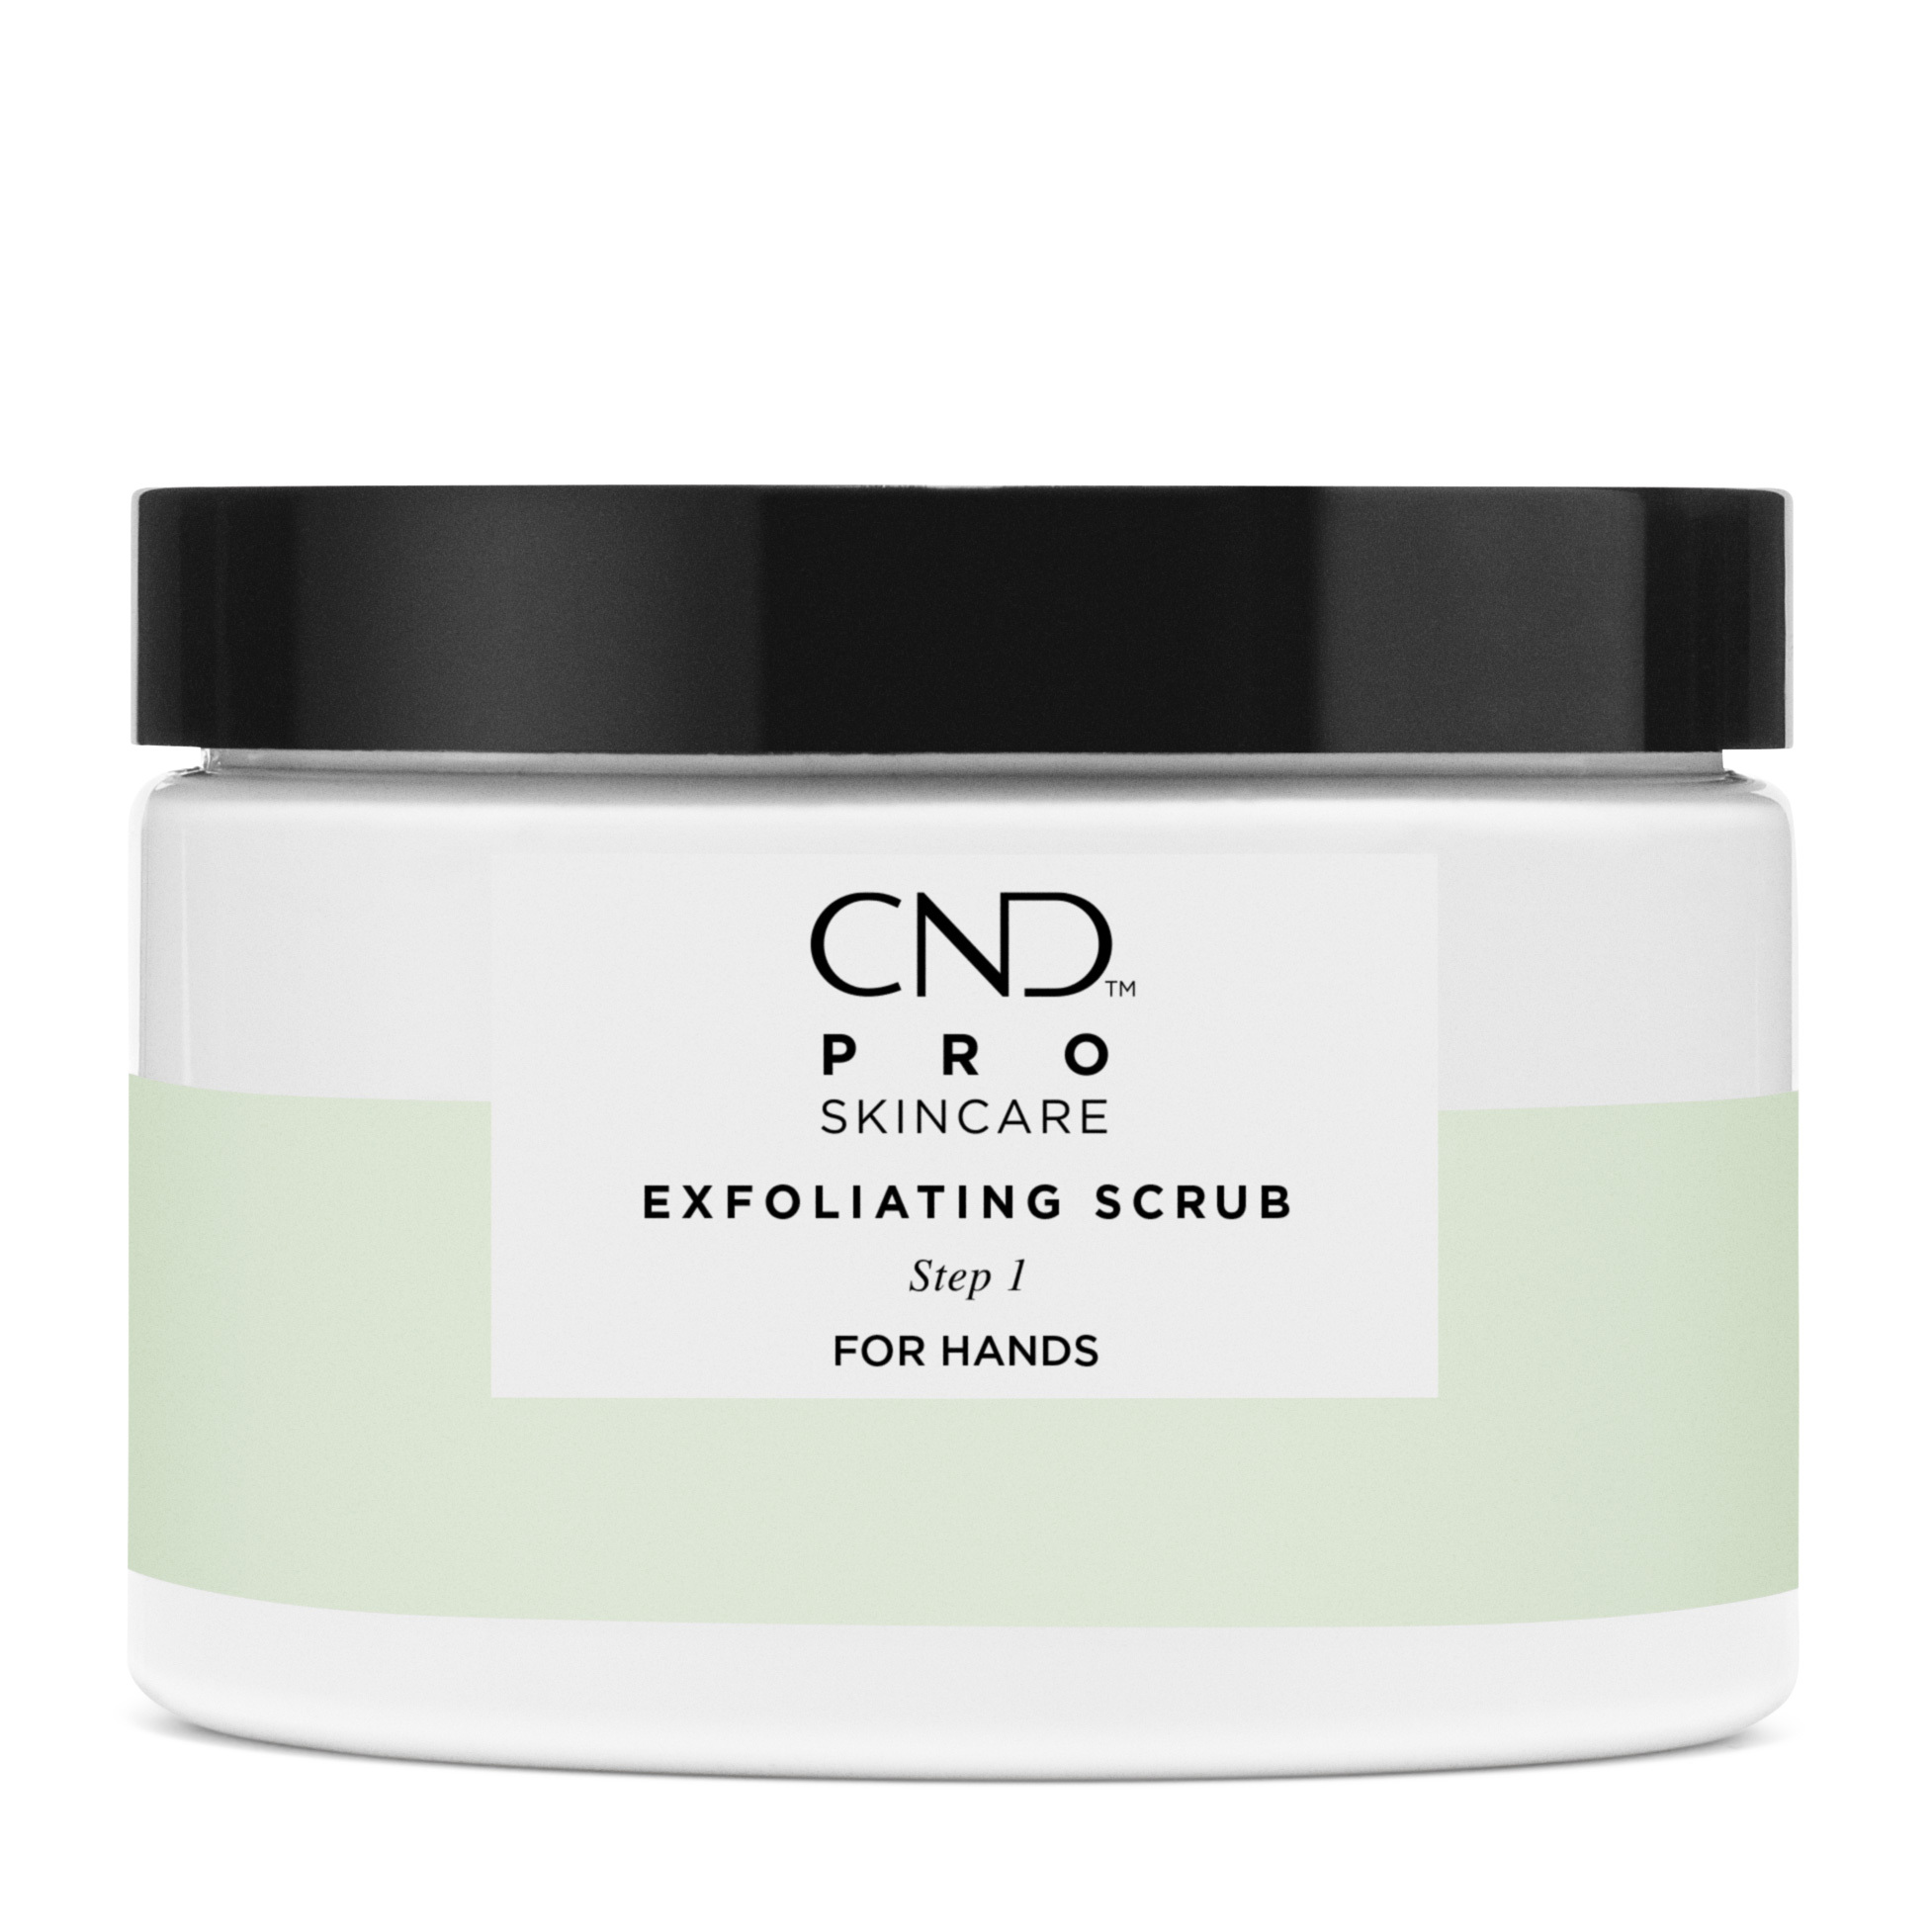 CND Pro SkinCare Exfoliating Scrub - Step 1 (for hands)